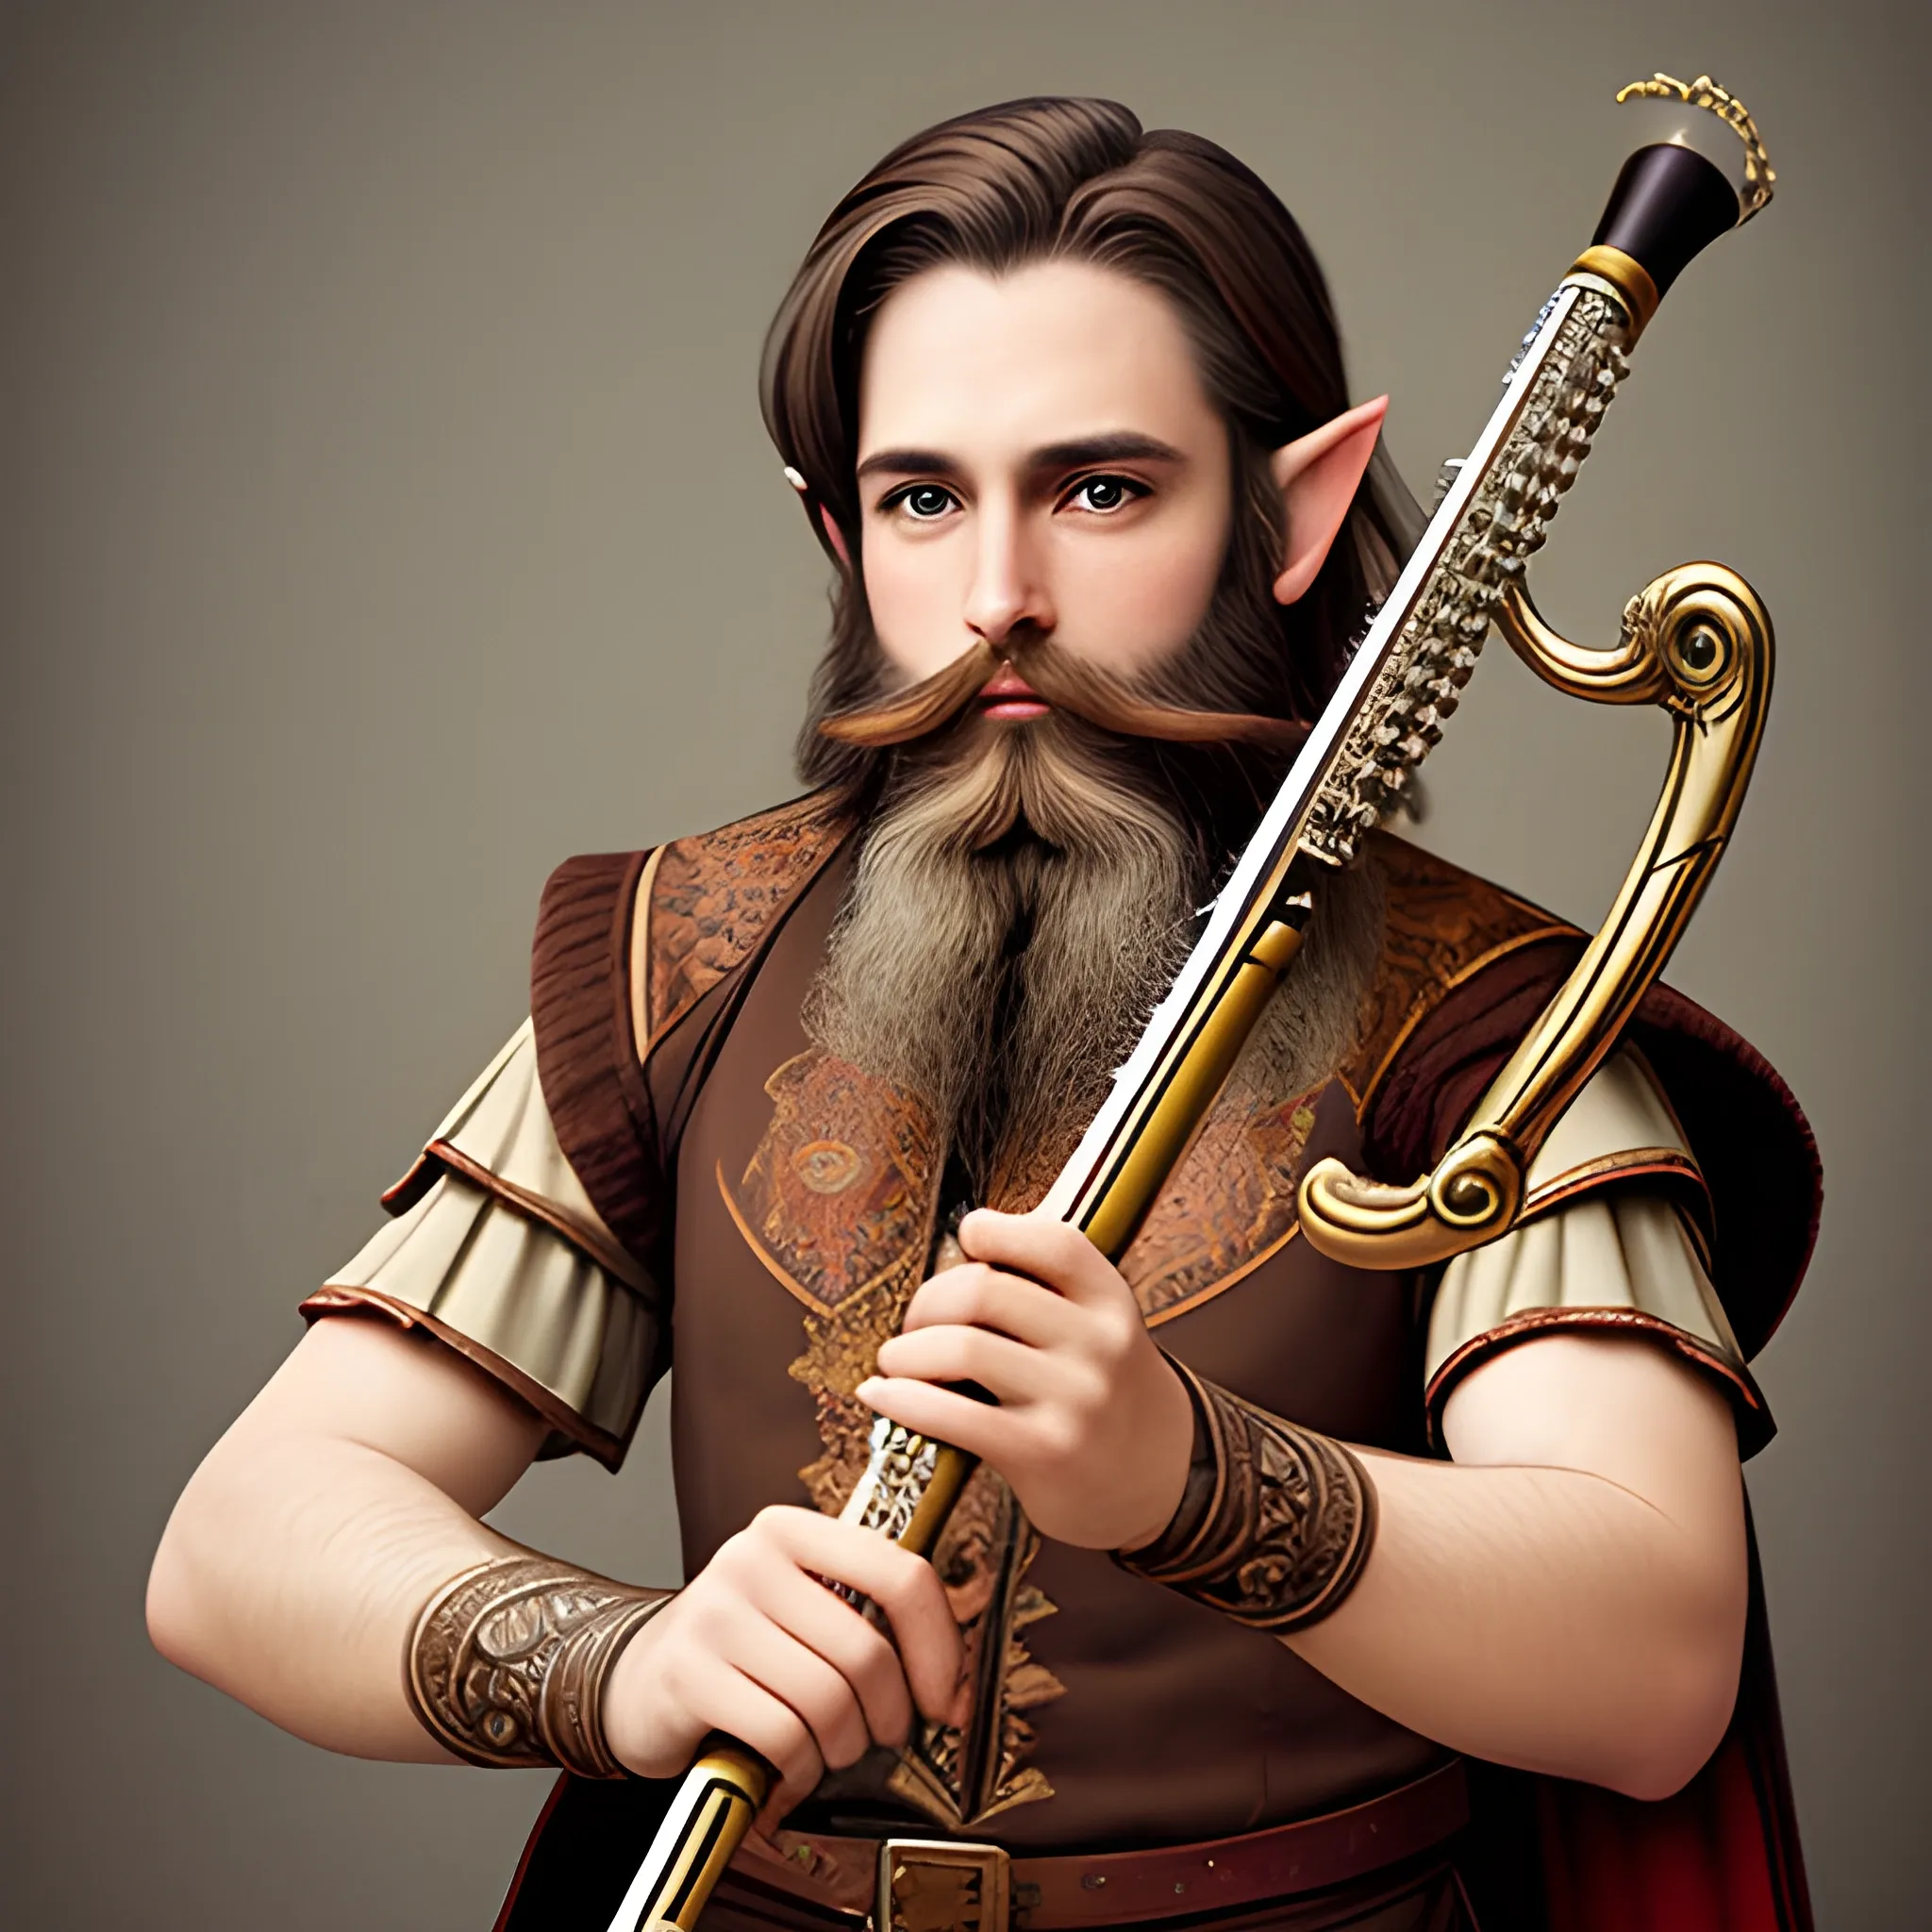 half-elf bard playing flute short brown hair man with beard
